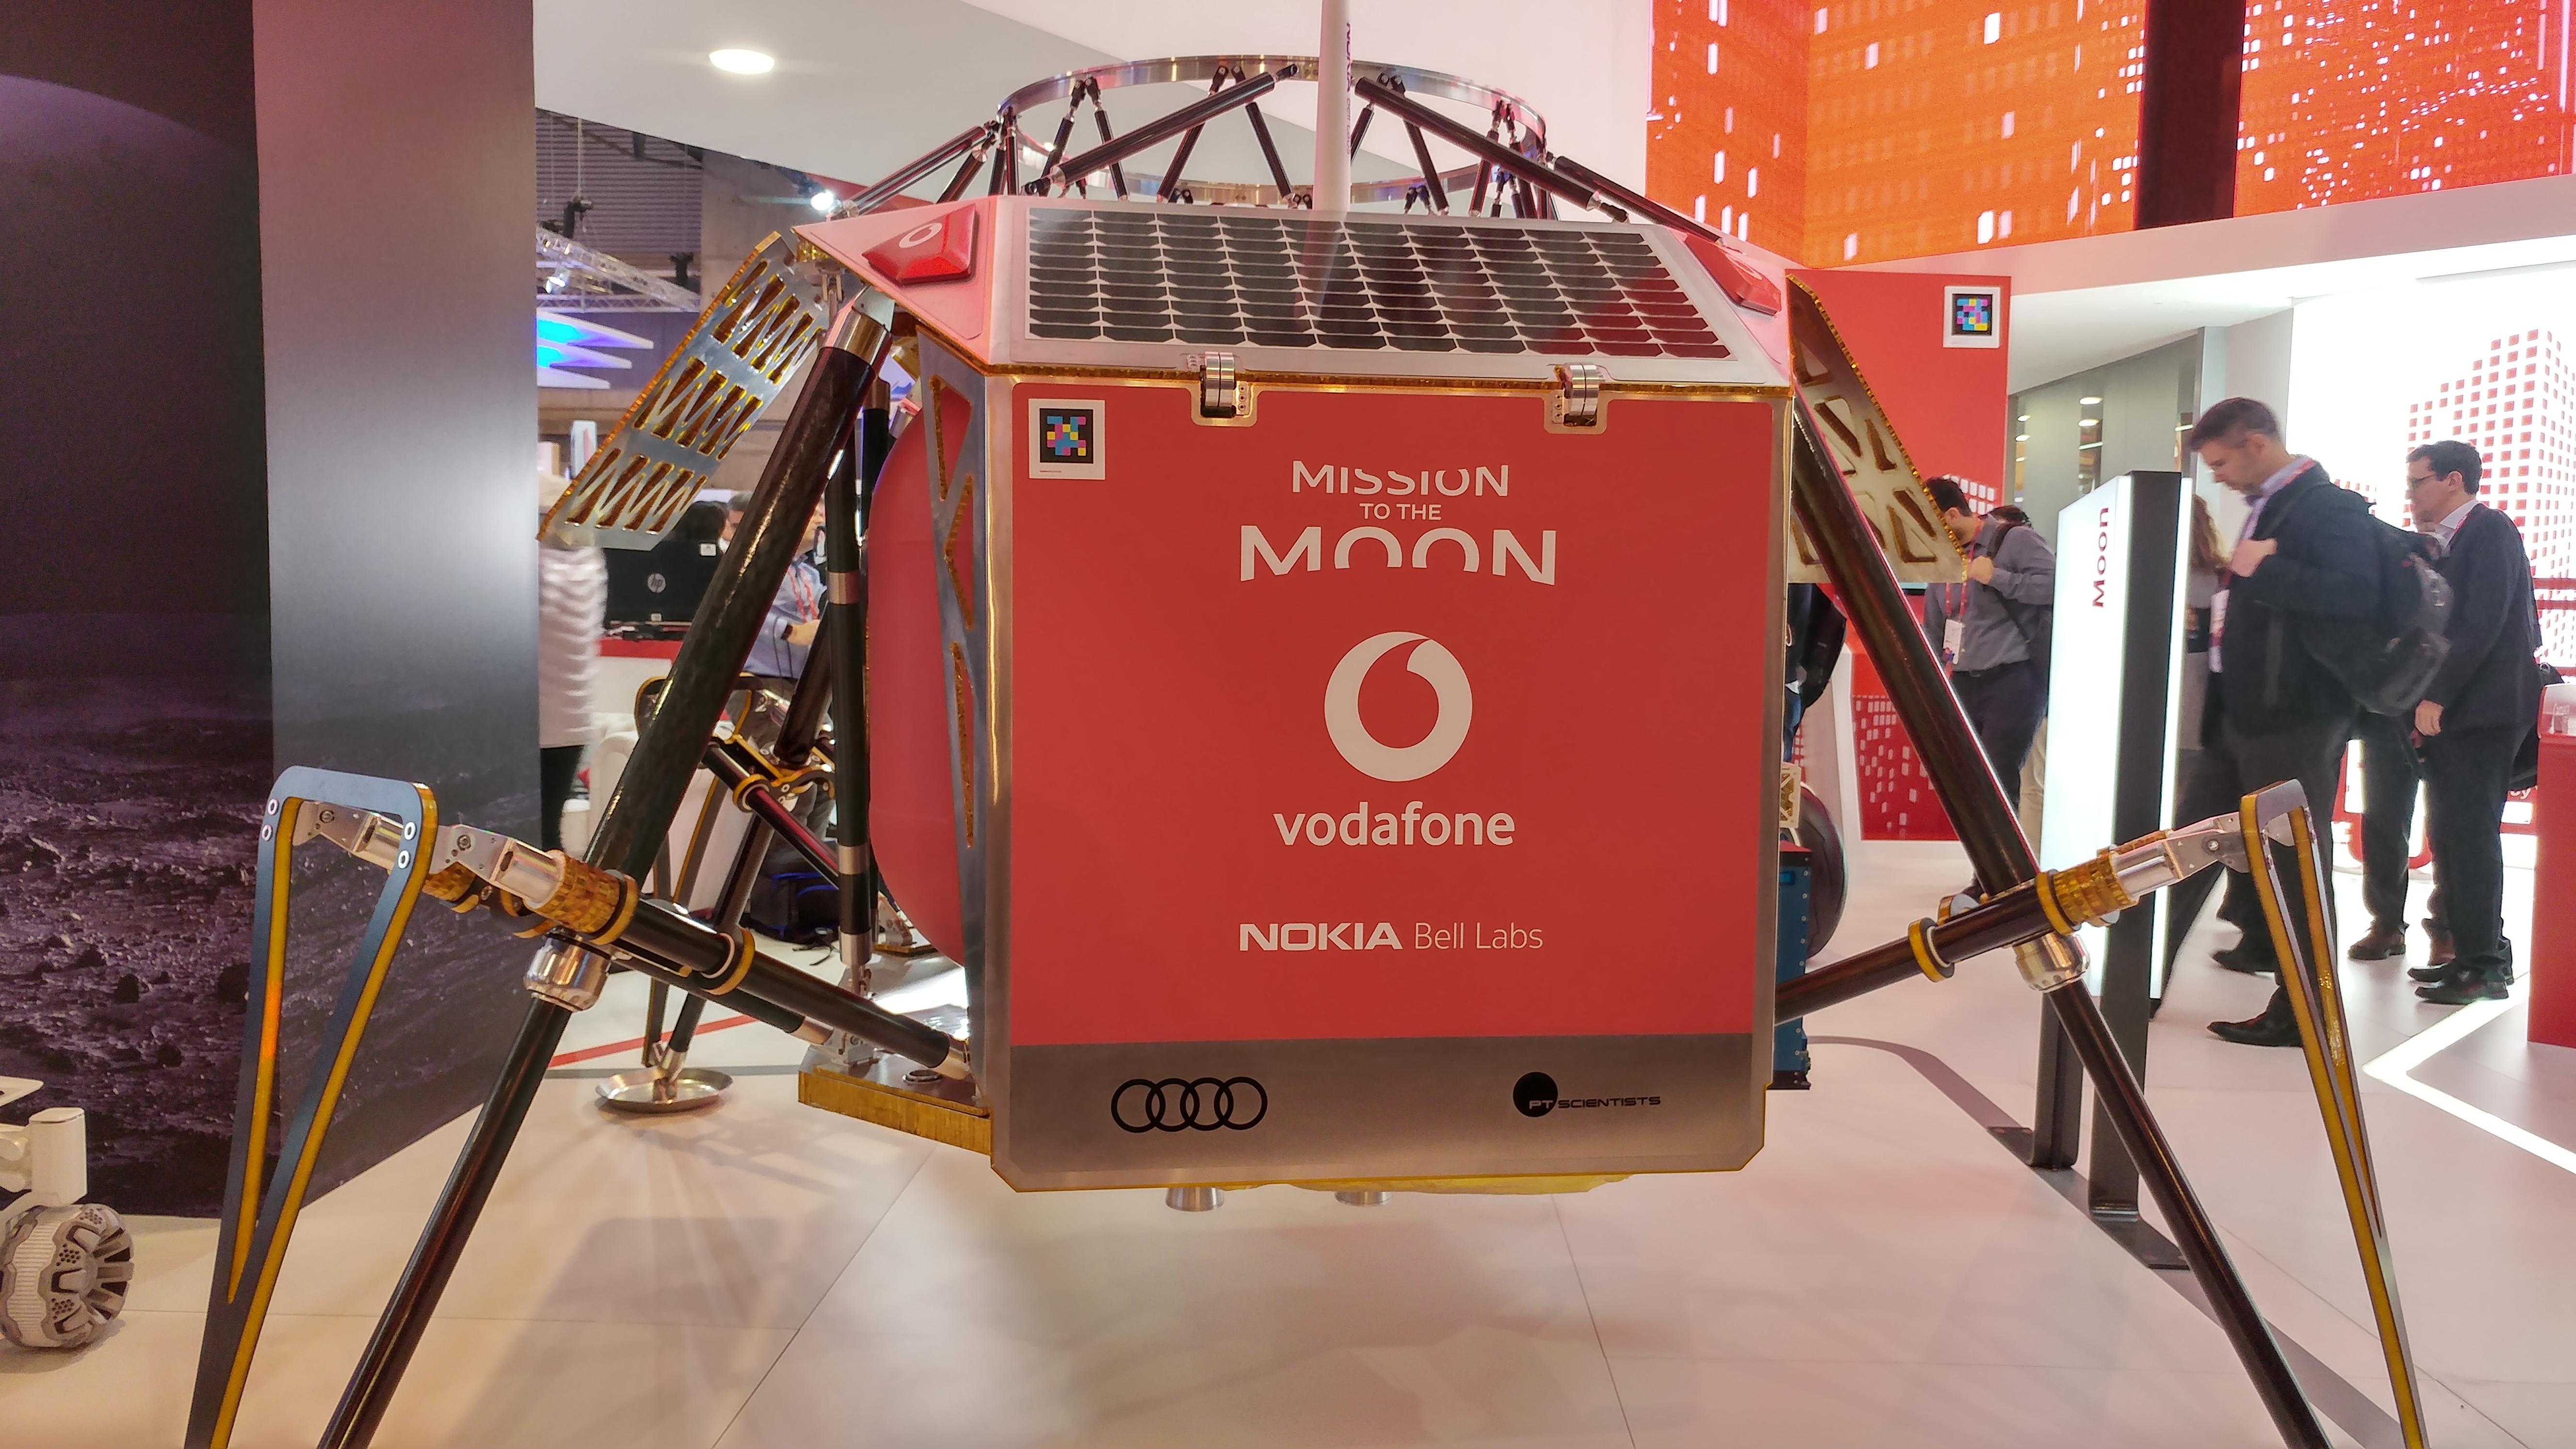 Vodafone, Nokia to deploy 4G on the moon | Telecom Asia